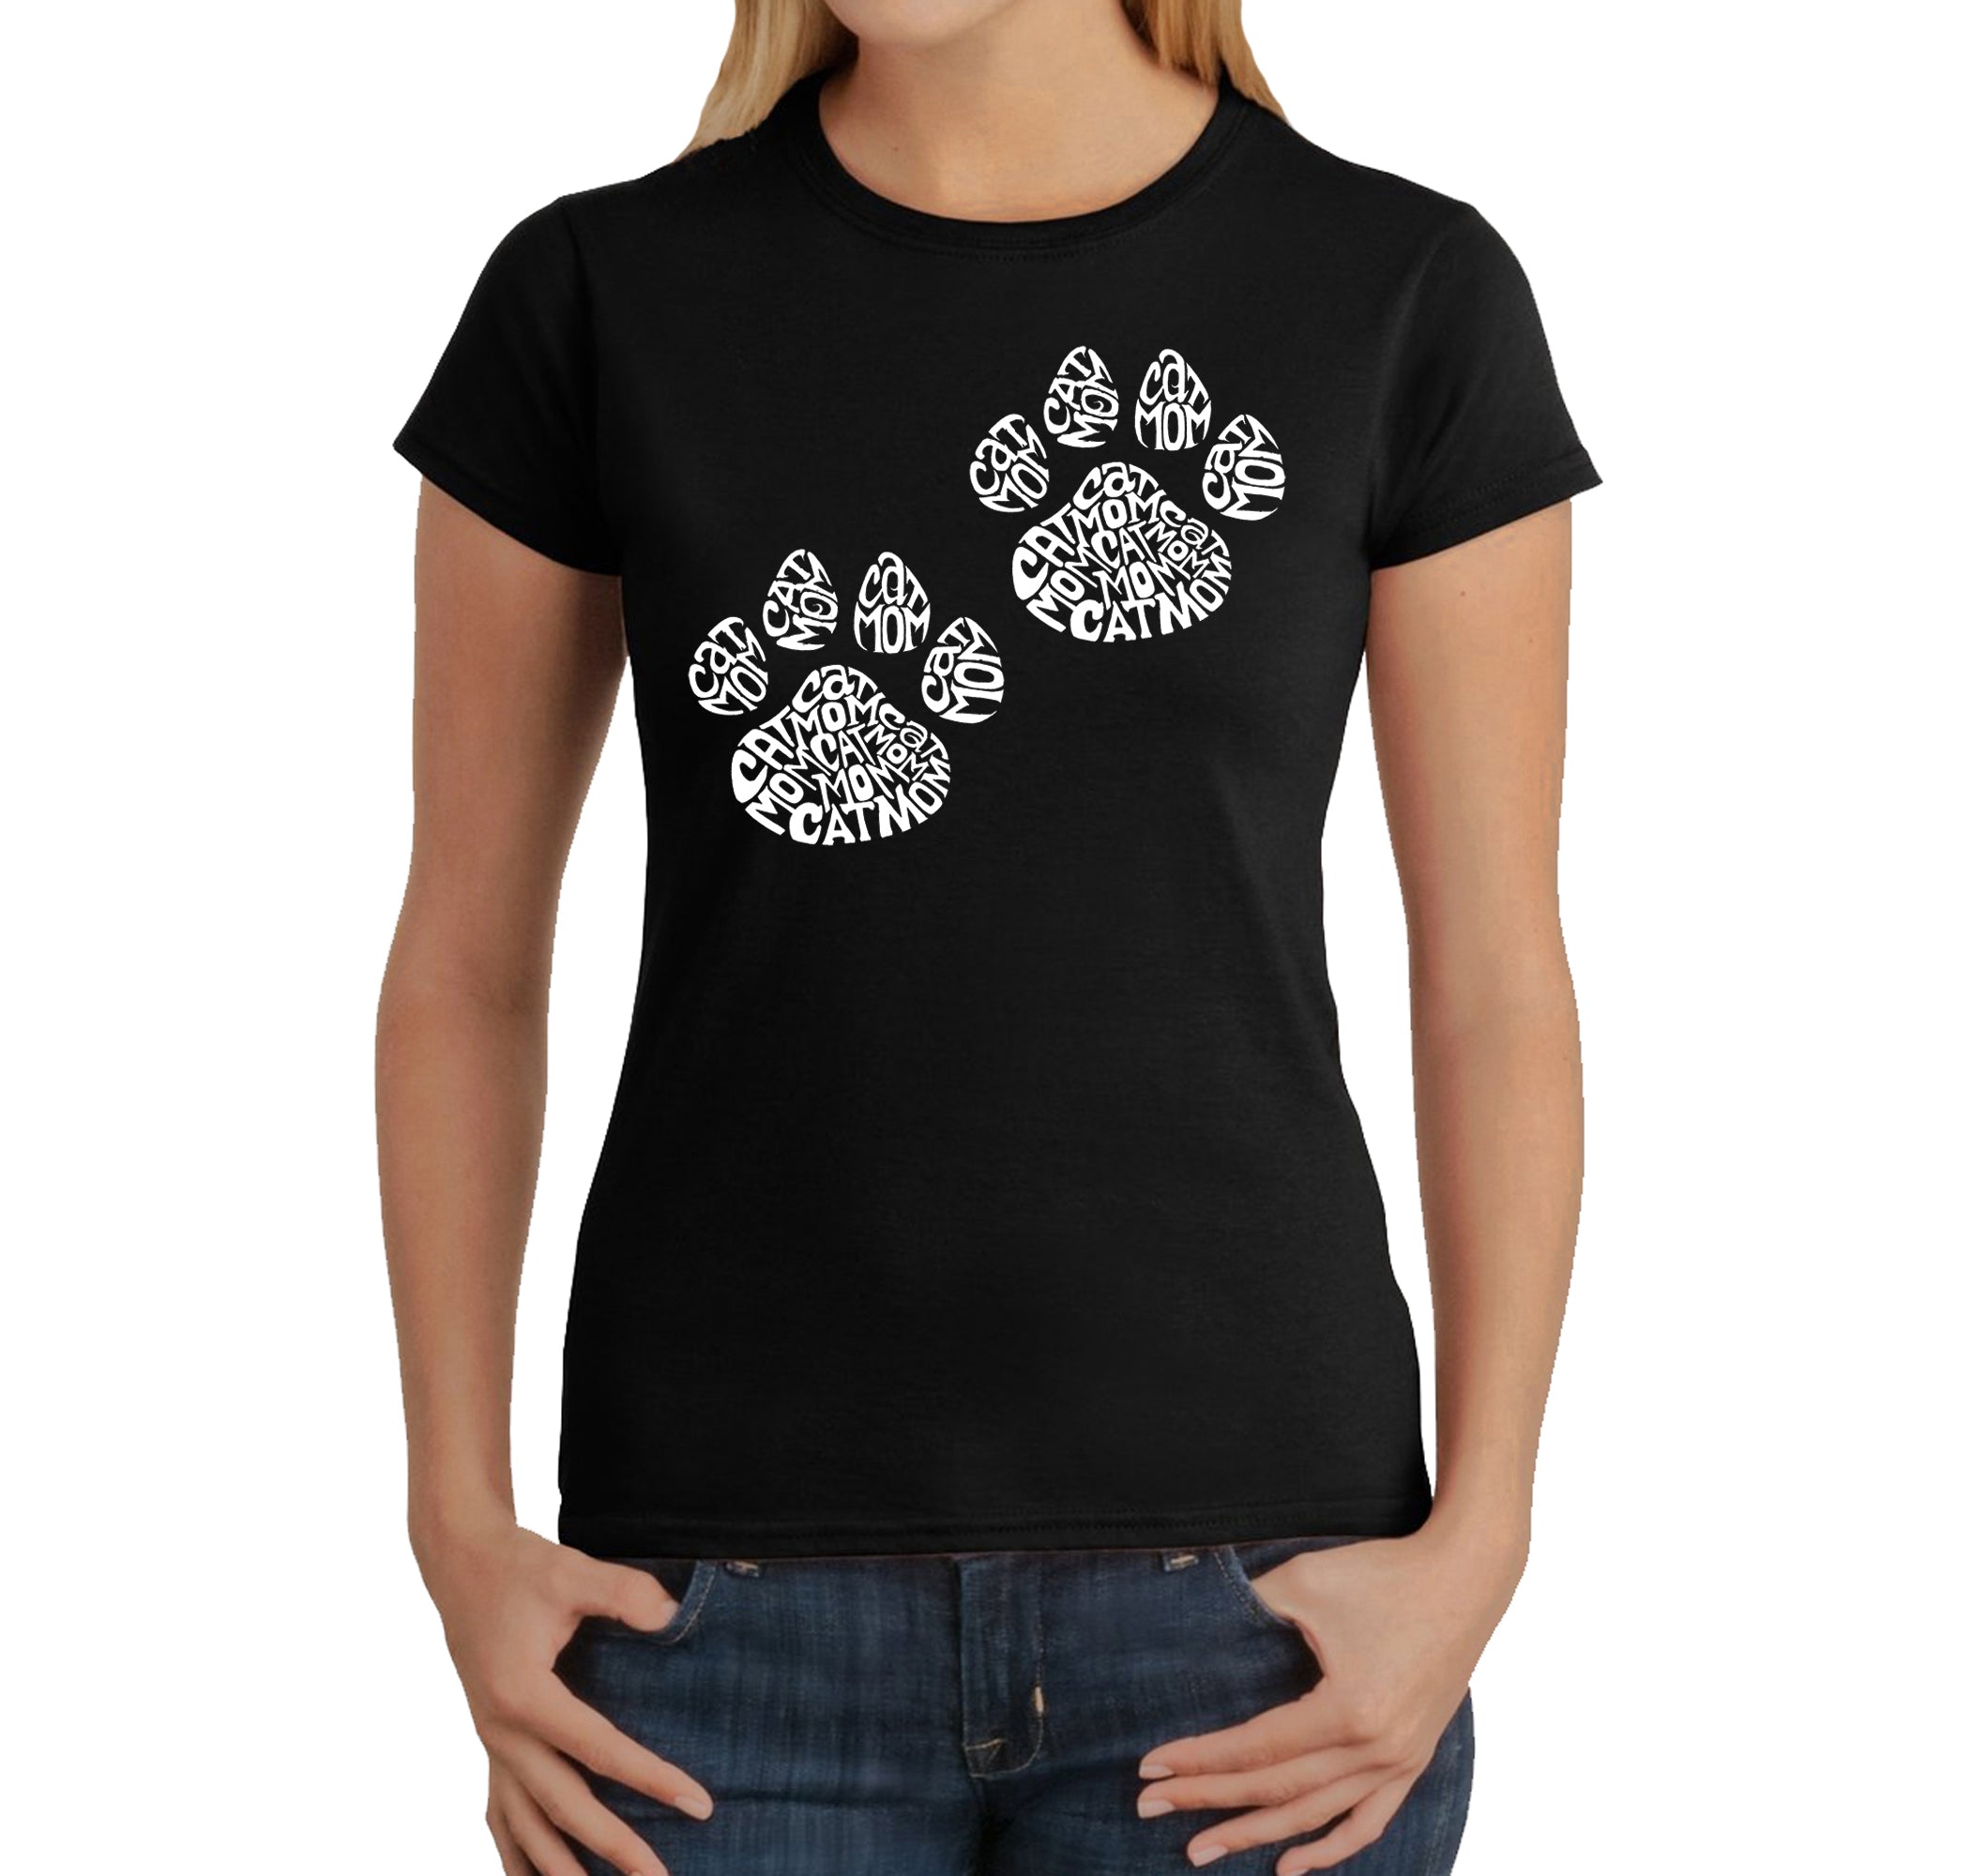 Cat Mom - Women's Word Art T-Shirt - Navy - Small